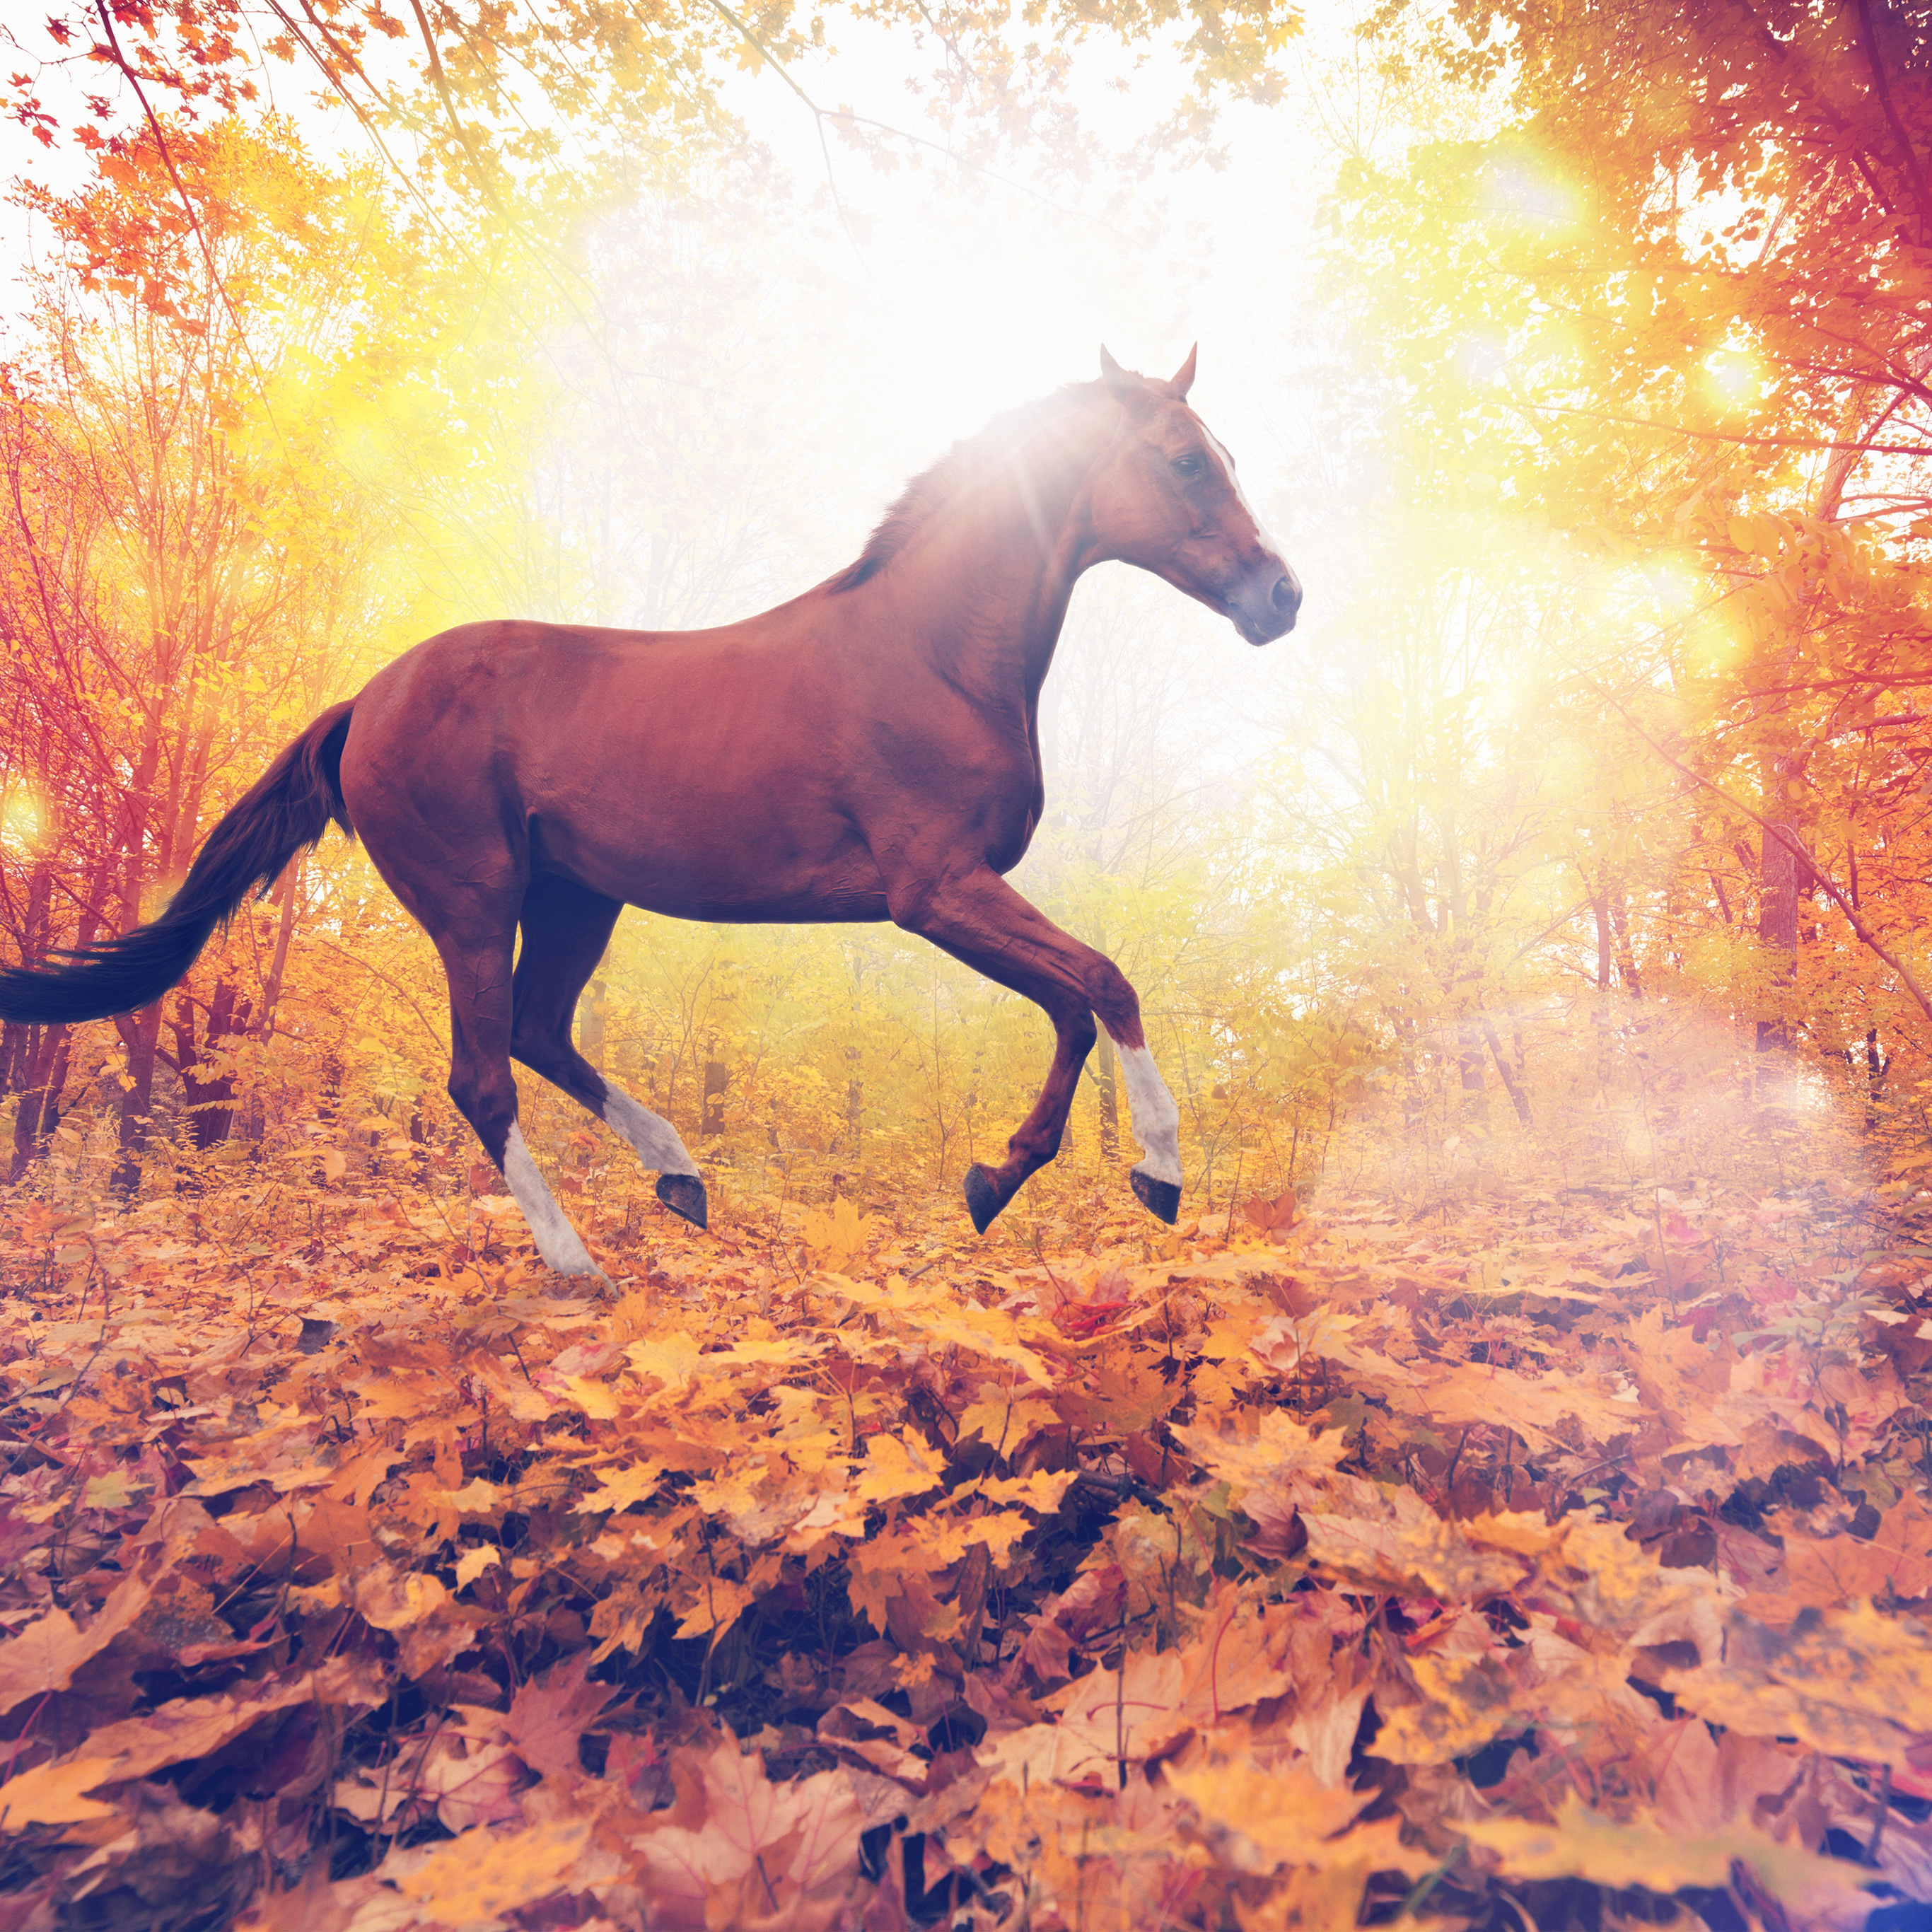 Horses In Fall Leaves - HD Wallpaper 